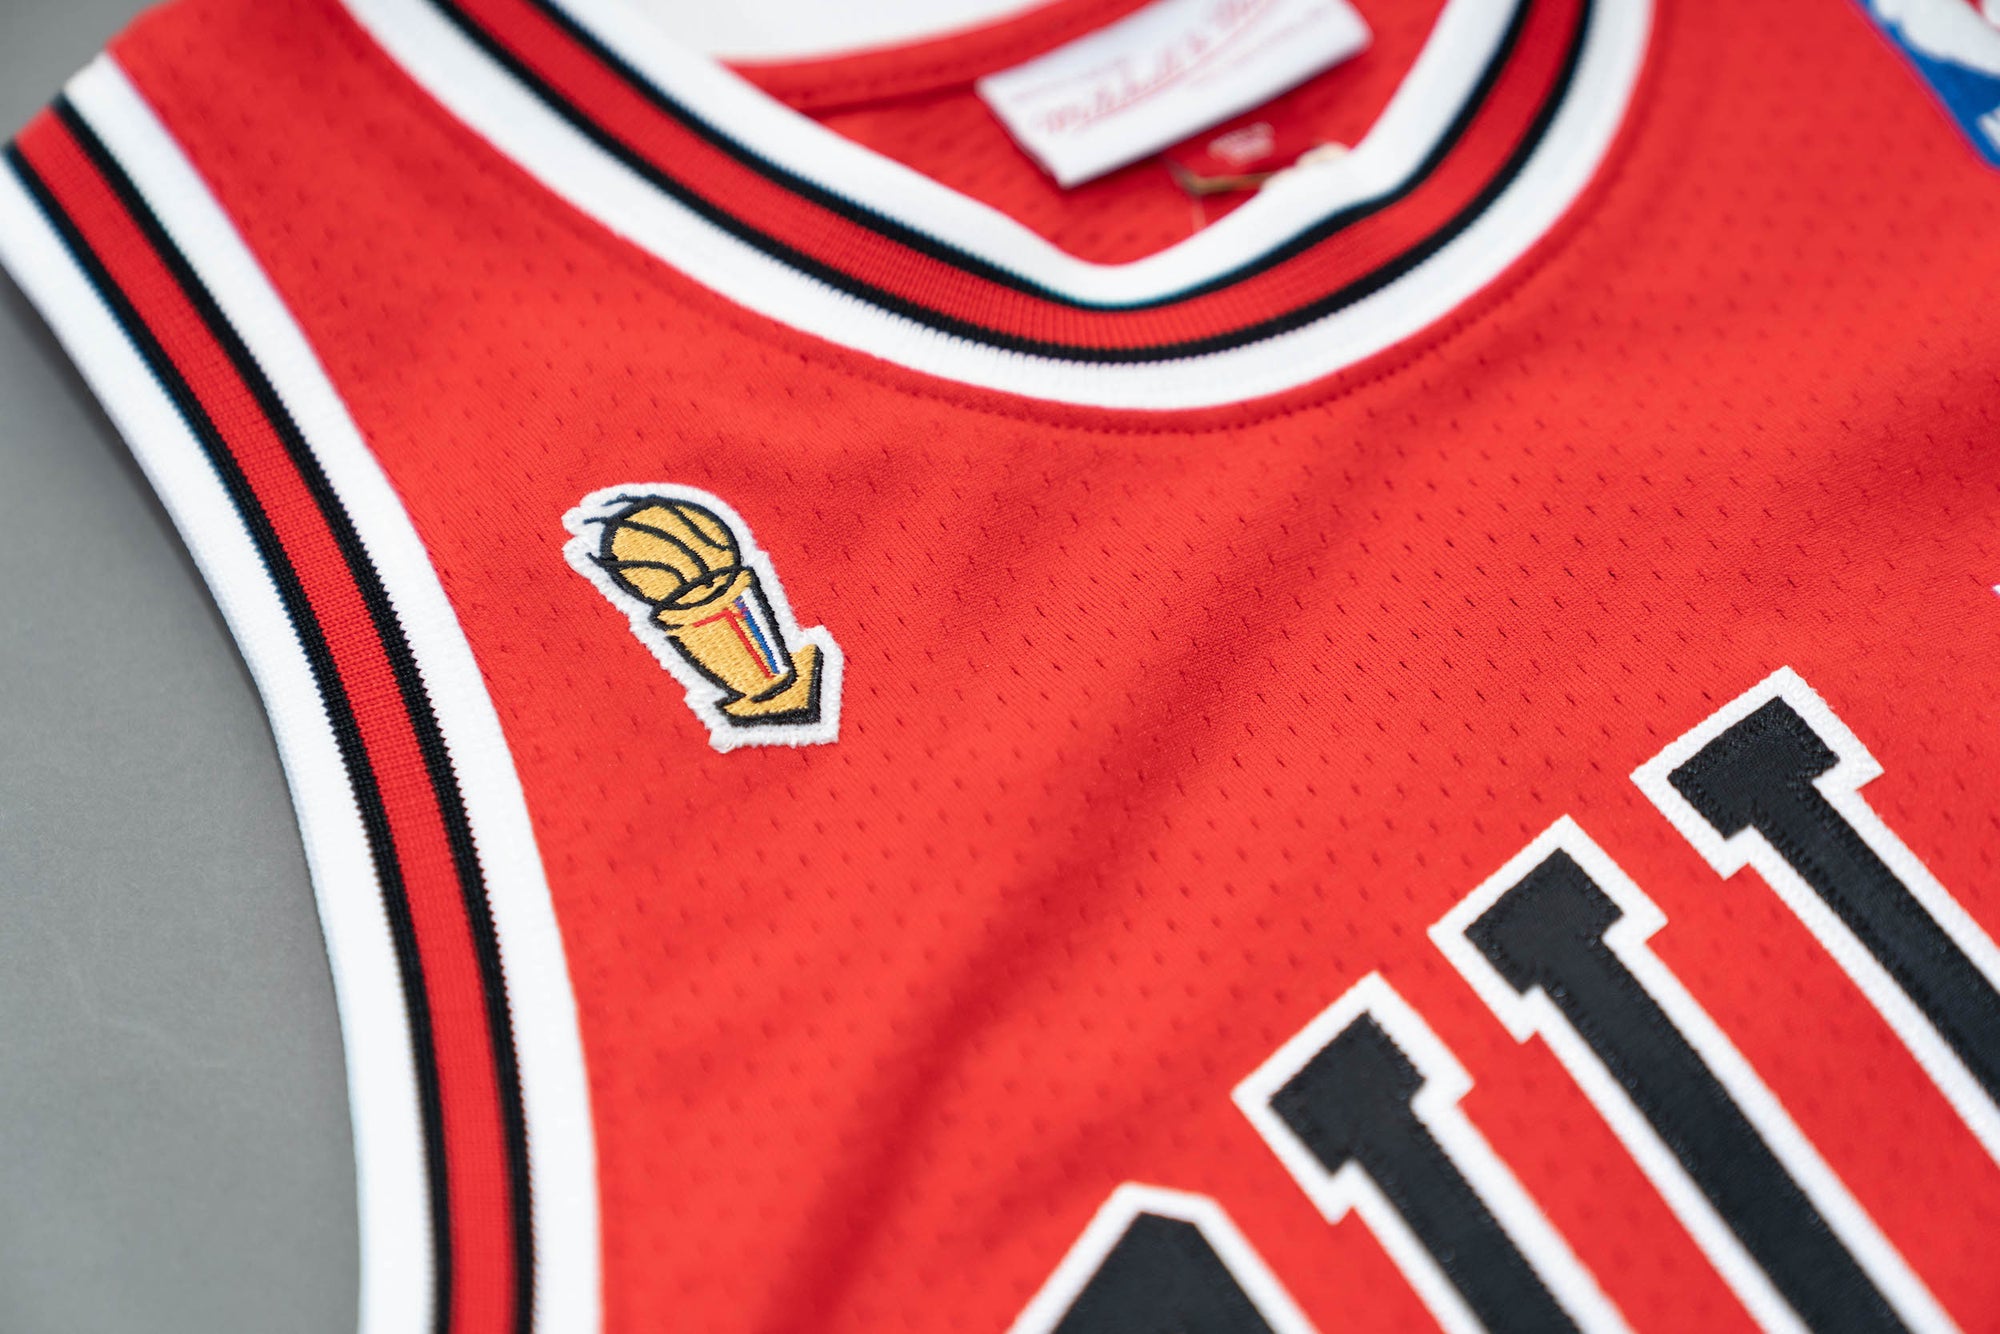 MITCHELL & NESS Chicago Bulls Michael Jordan 1997-98 Authentic